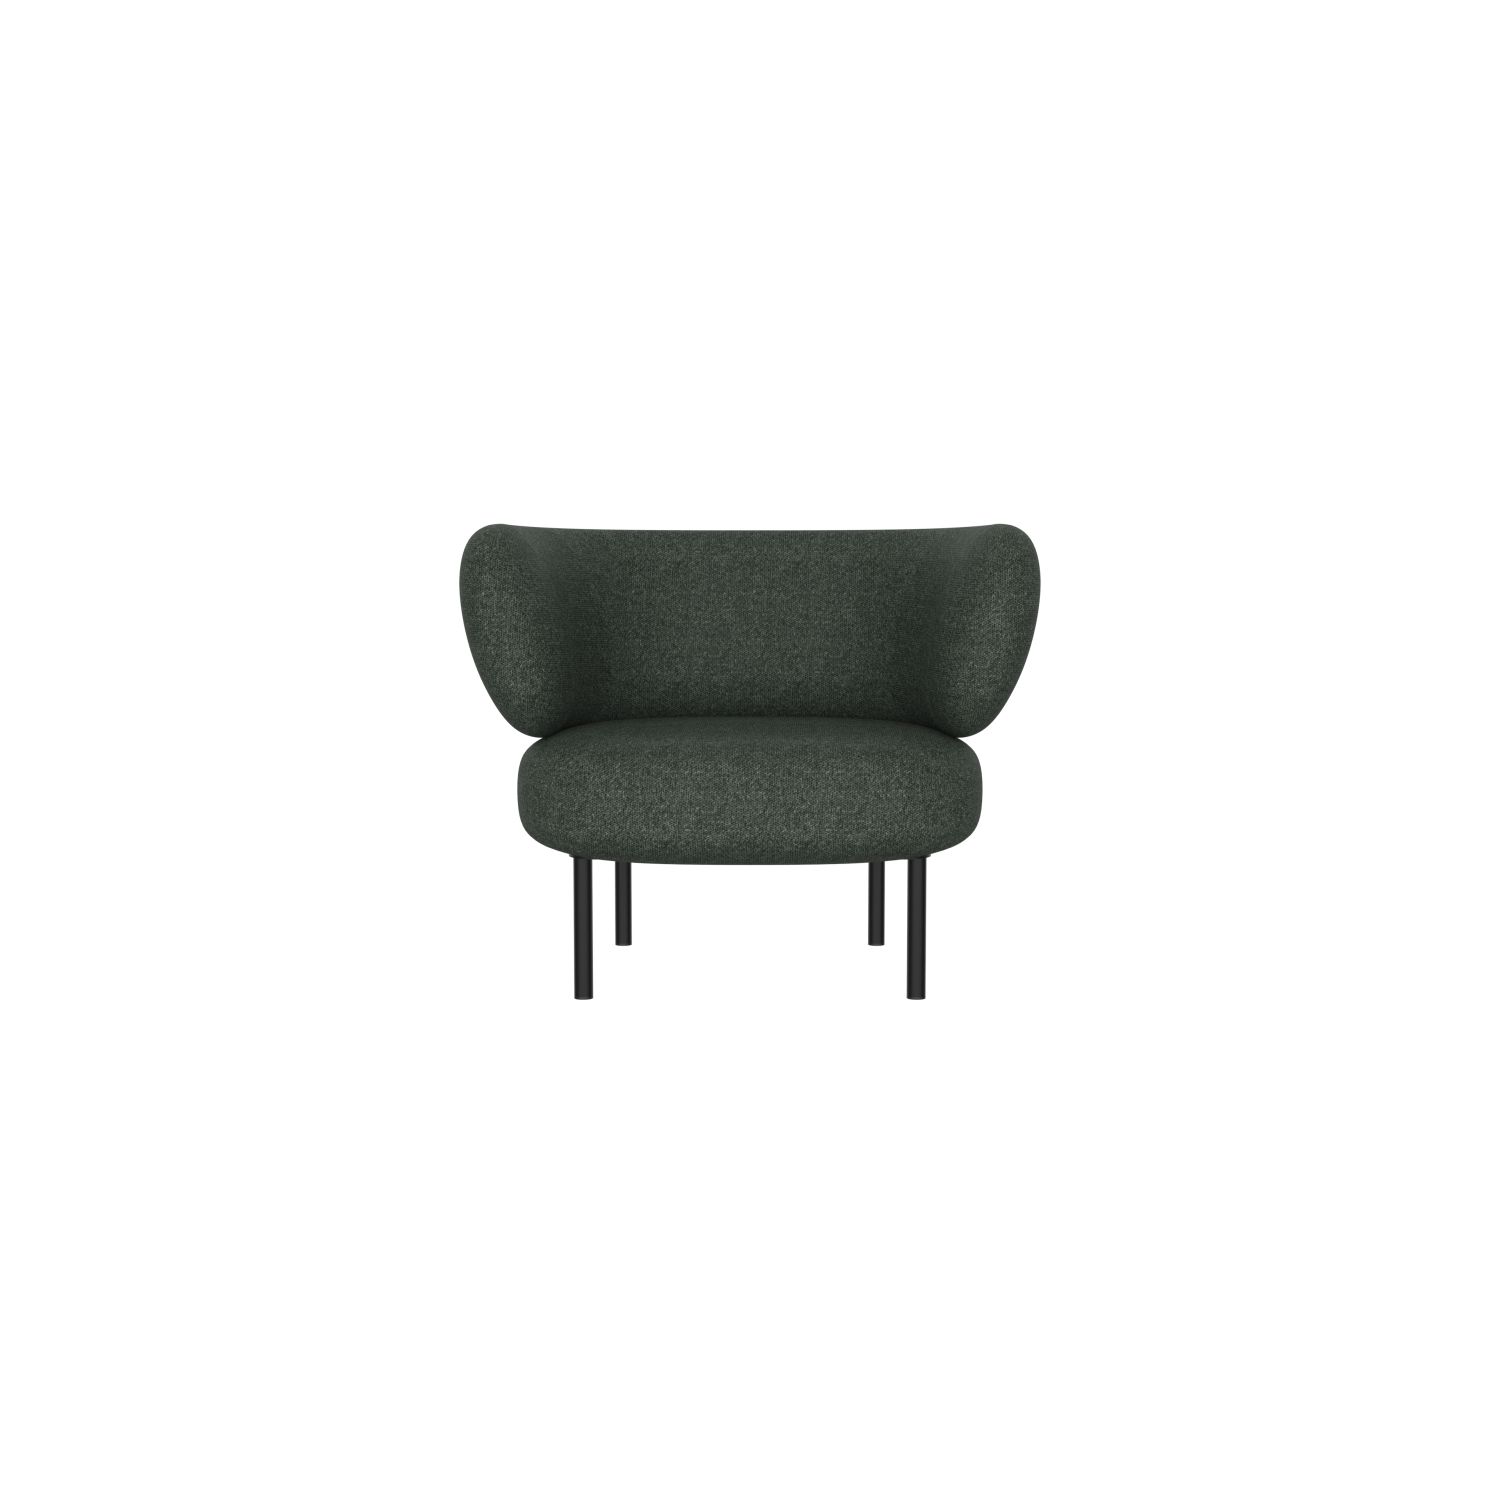 lensvelt studio stefan scholten sofa 1seater 100x77cm middle lounge part moss summer green 38 frame black ral9005